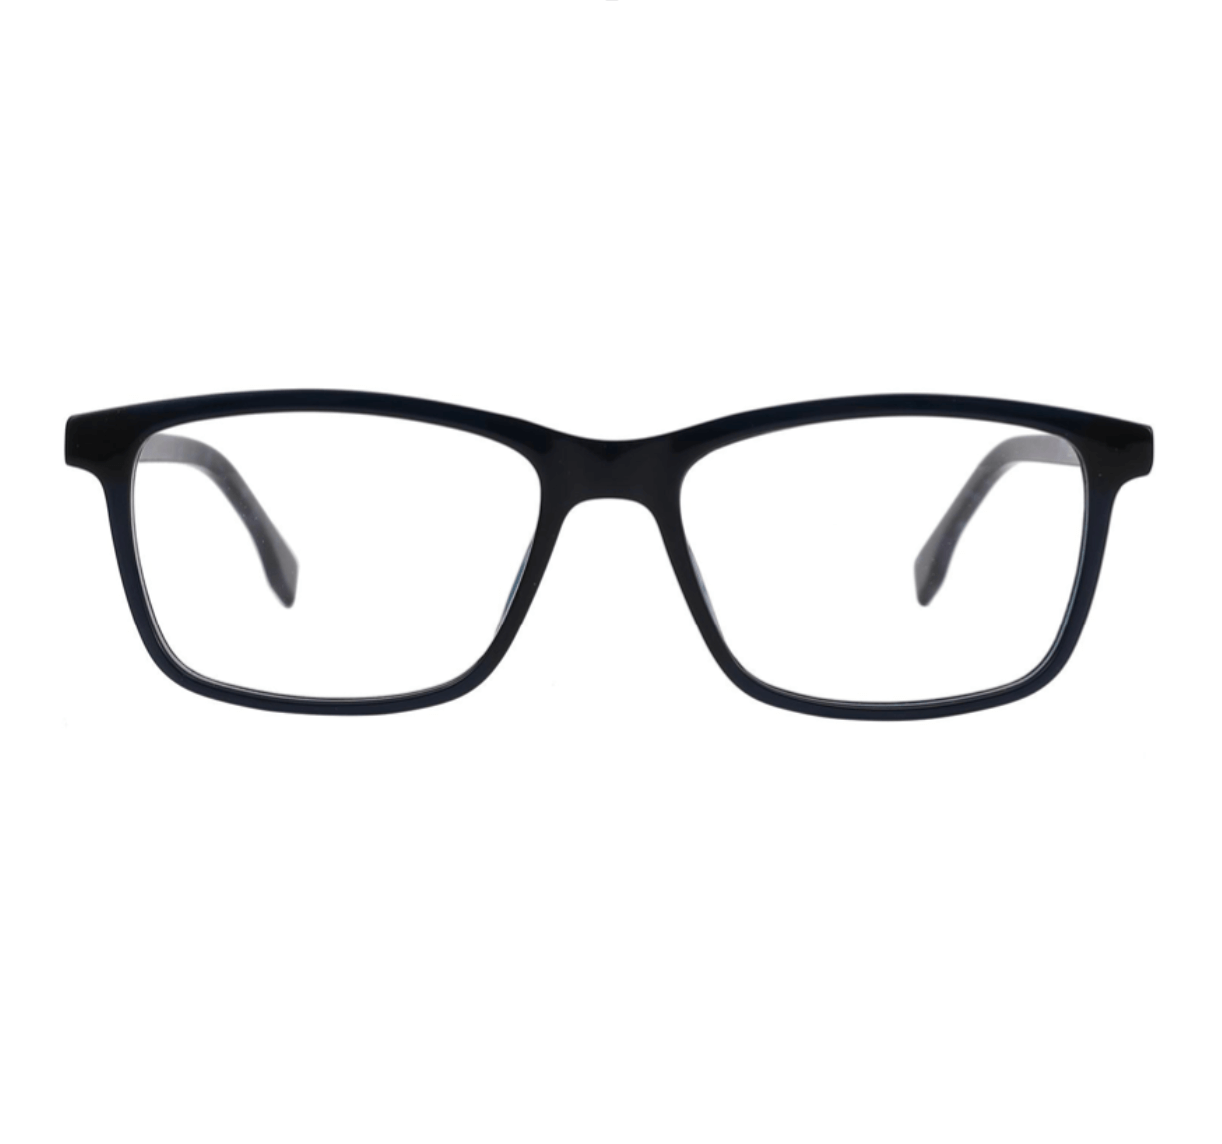 Wholesale eyeglass frames acetate, Optical frames manufacture, customize eyeglasses frames